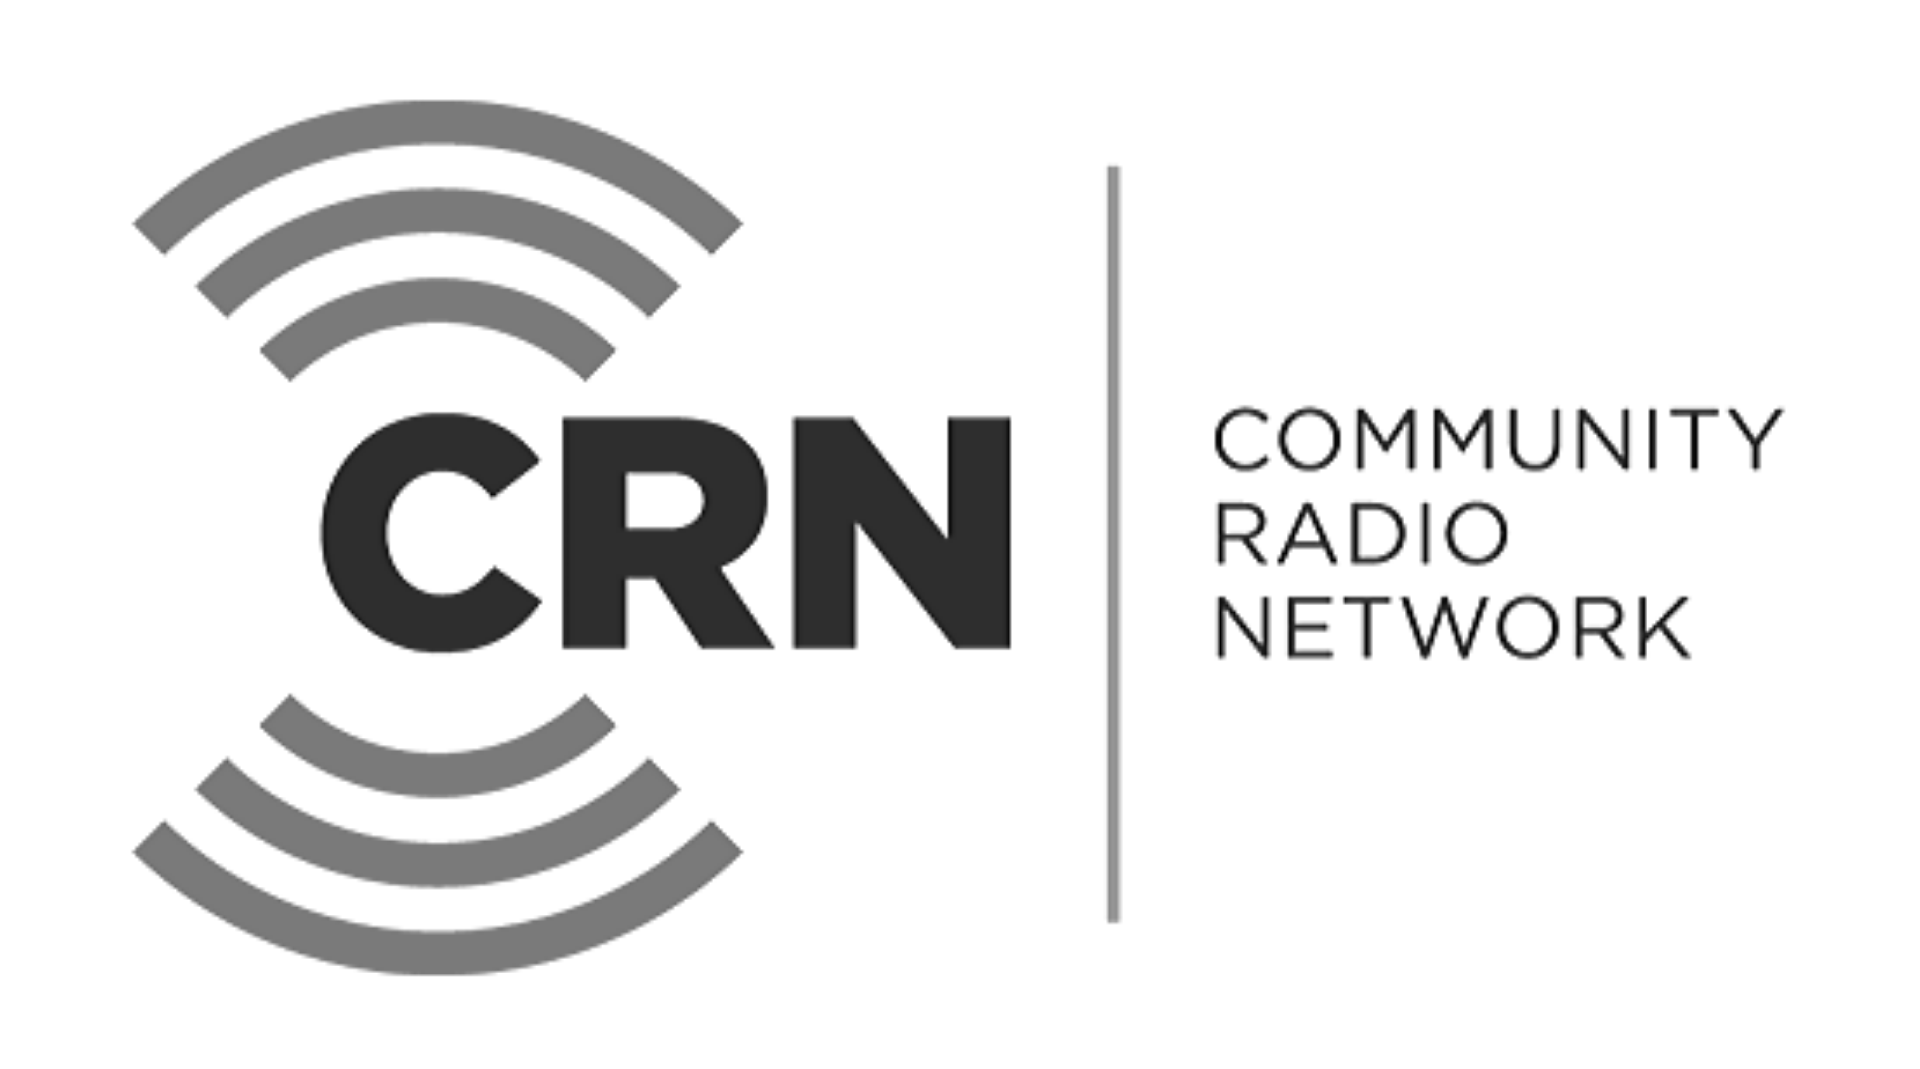 Community Radio Network